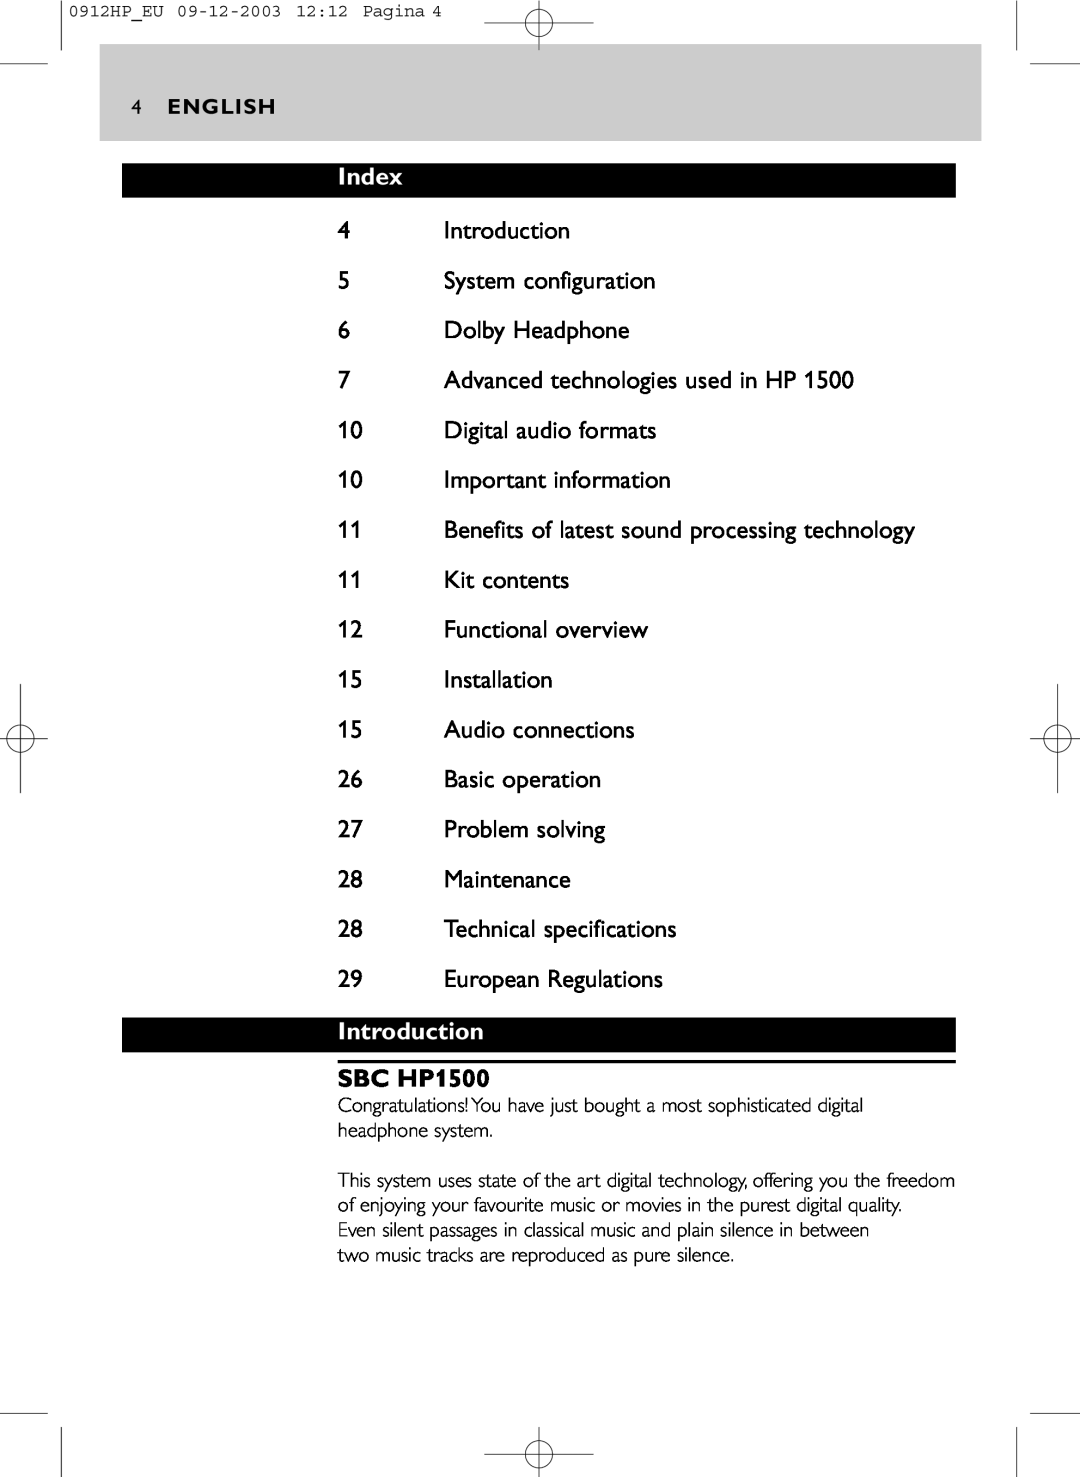 Philips manual Index, Introduction, SBC HP1500 